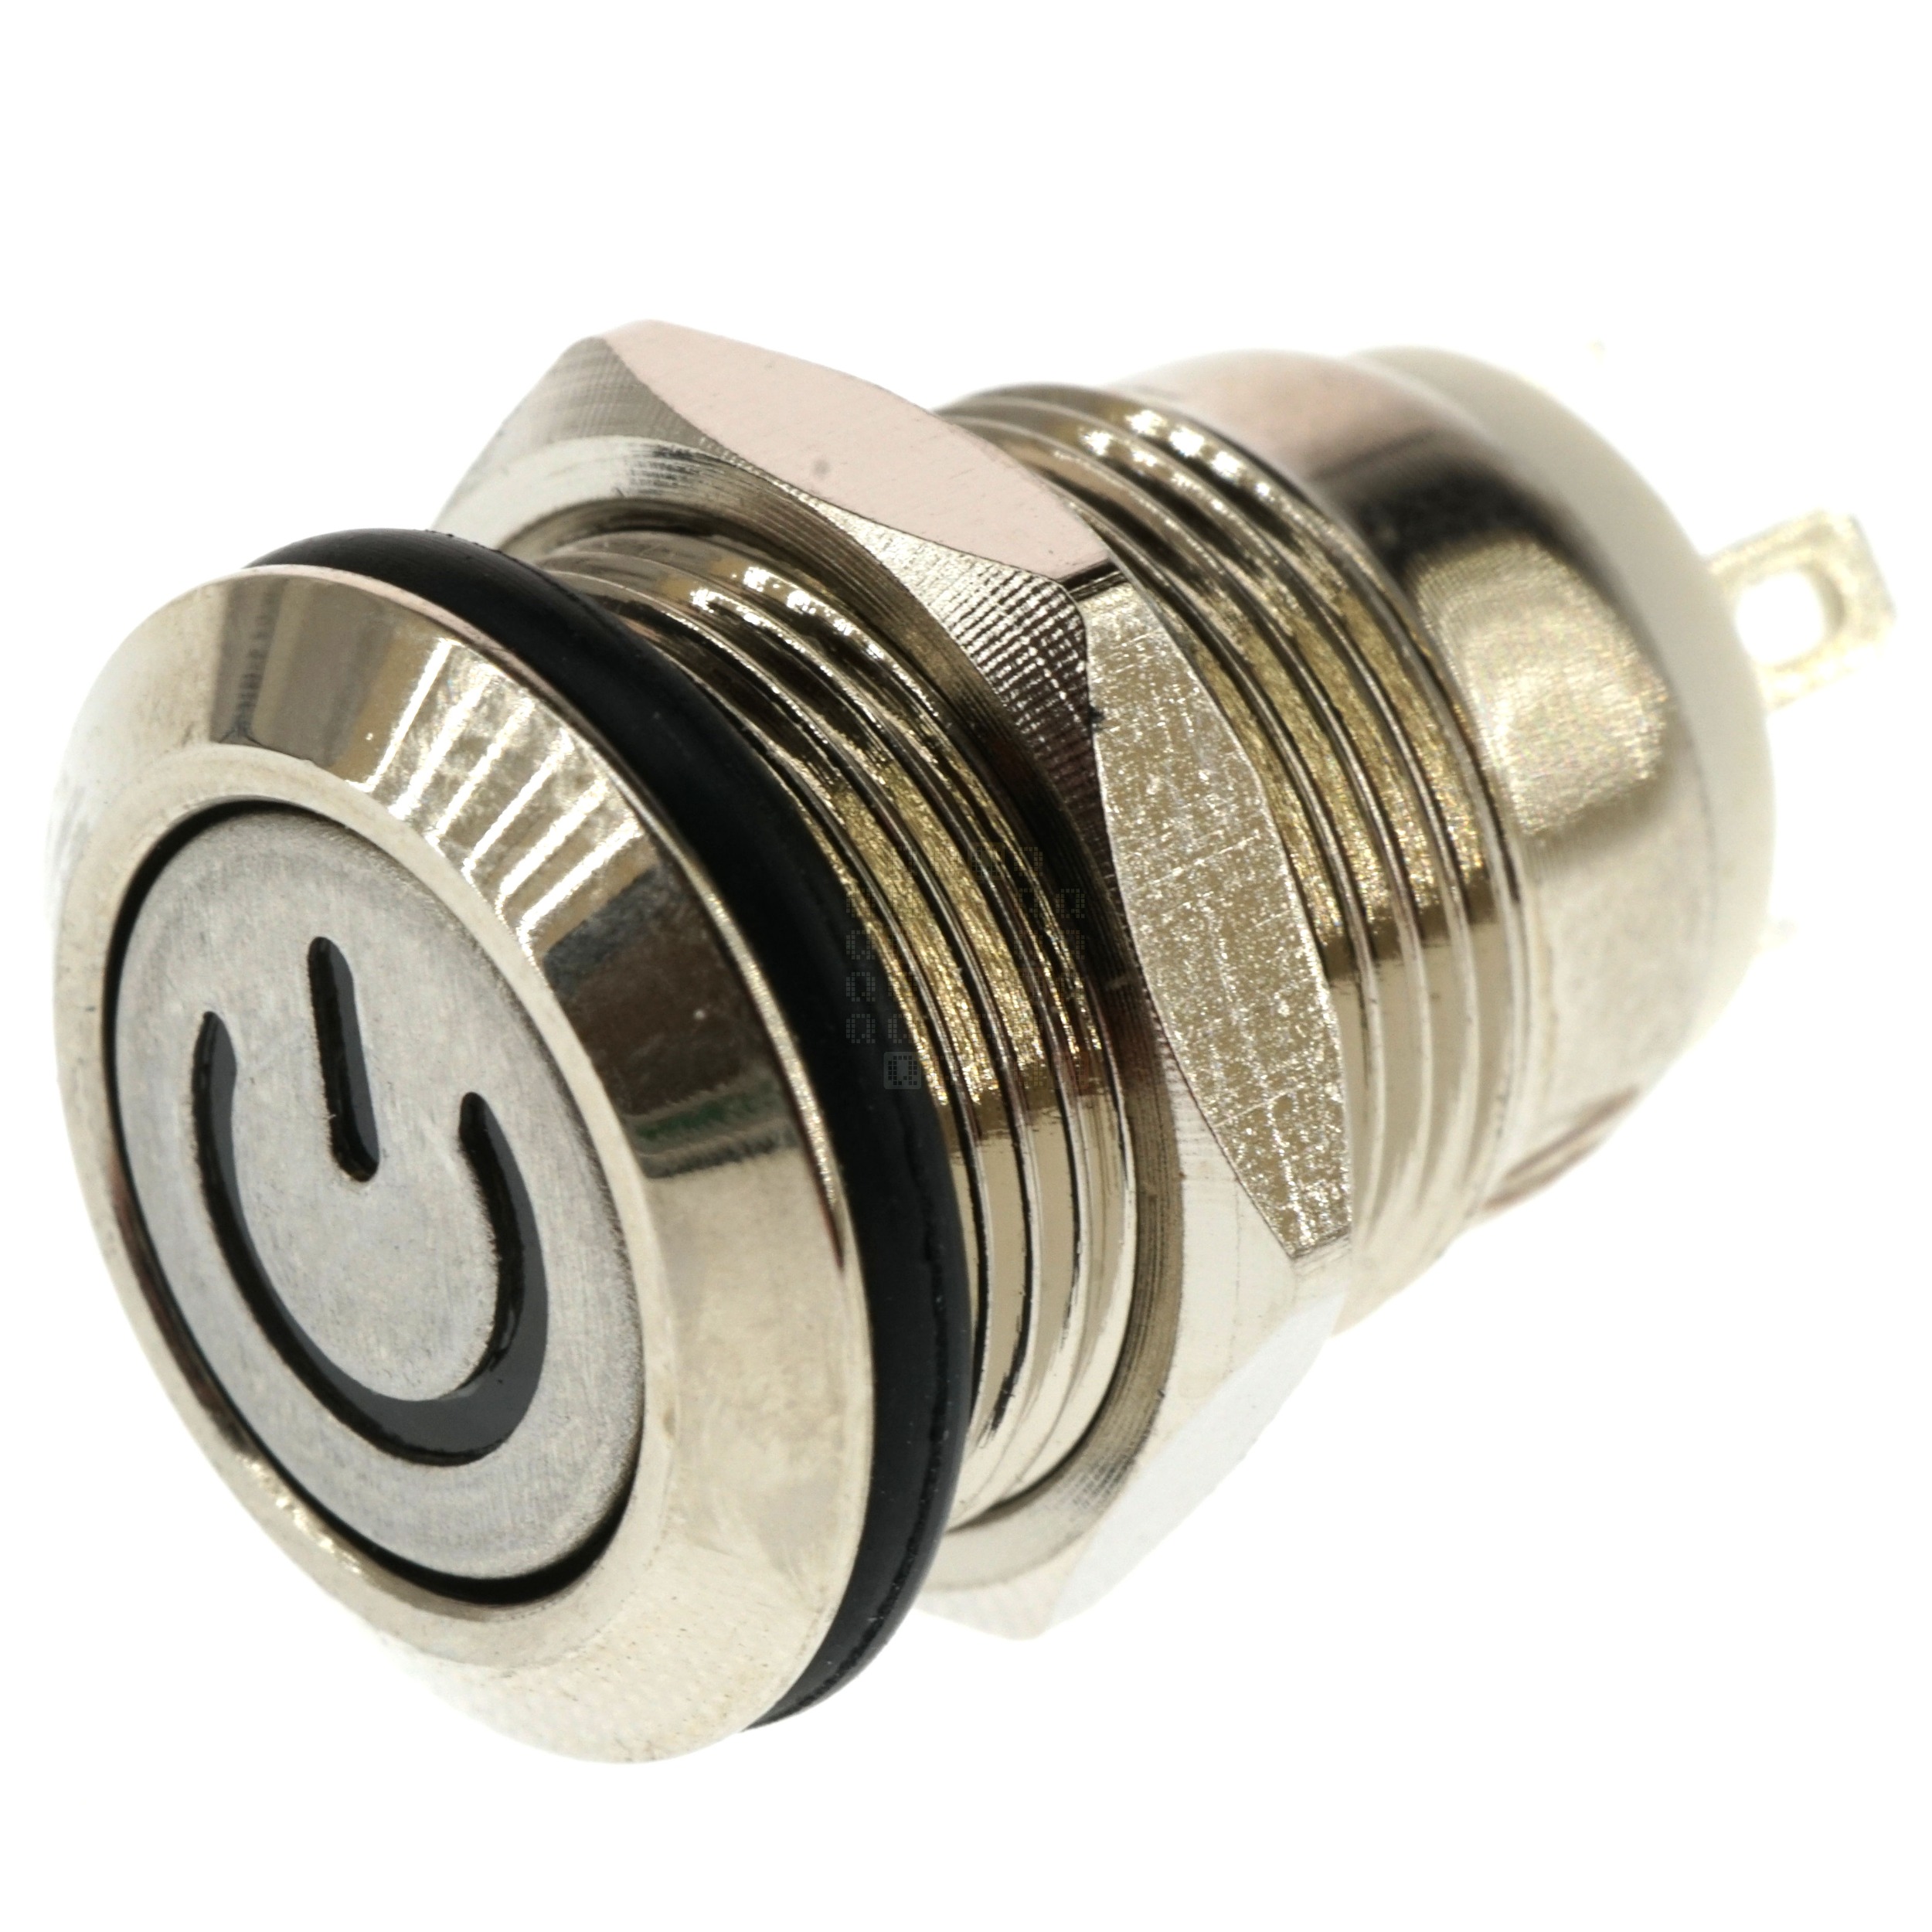 12mm Threaded Metal Pushbutton, Momentary, White LED, 12-24VDC, IP65, SPST, Power Symbol